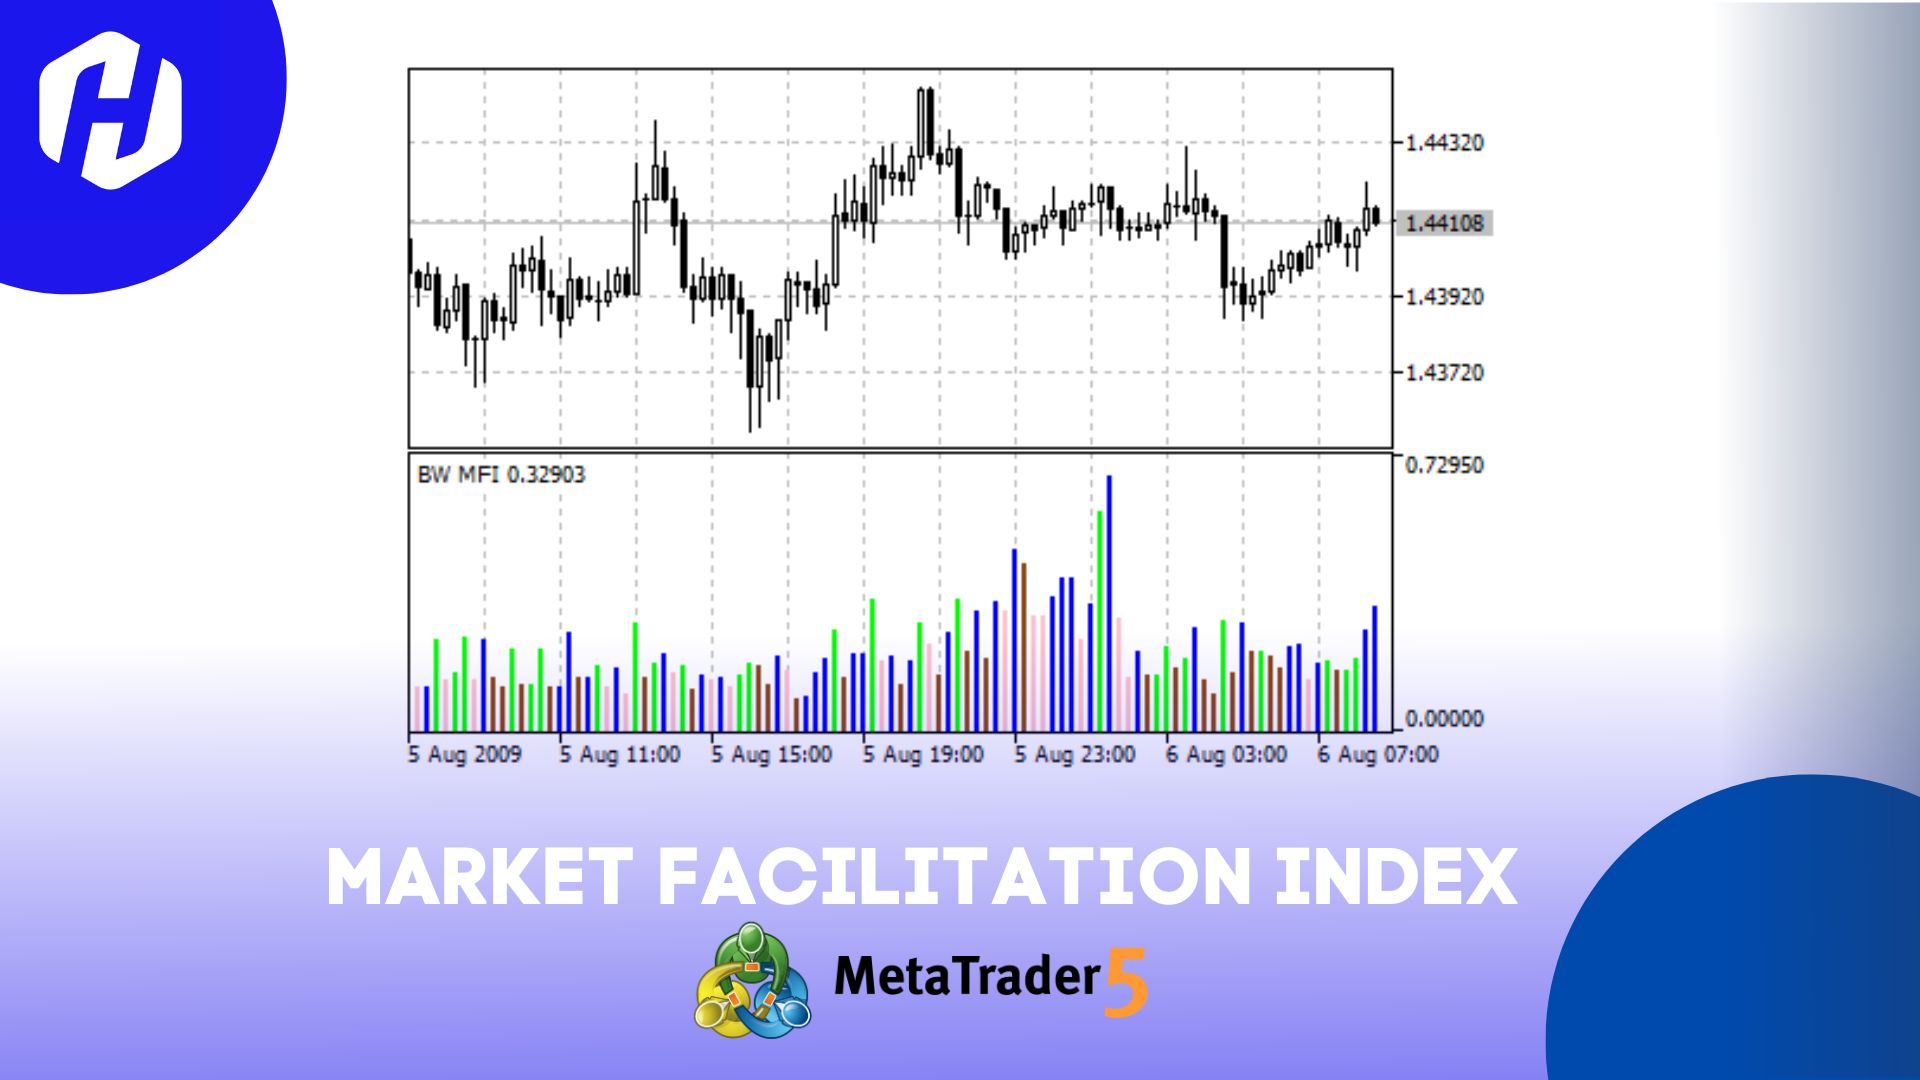 Mengenal Indikator Market Facilitation Index MFI